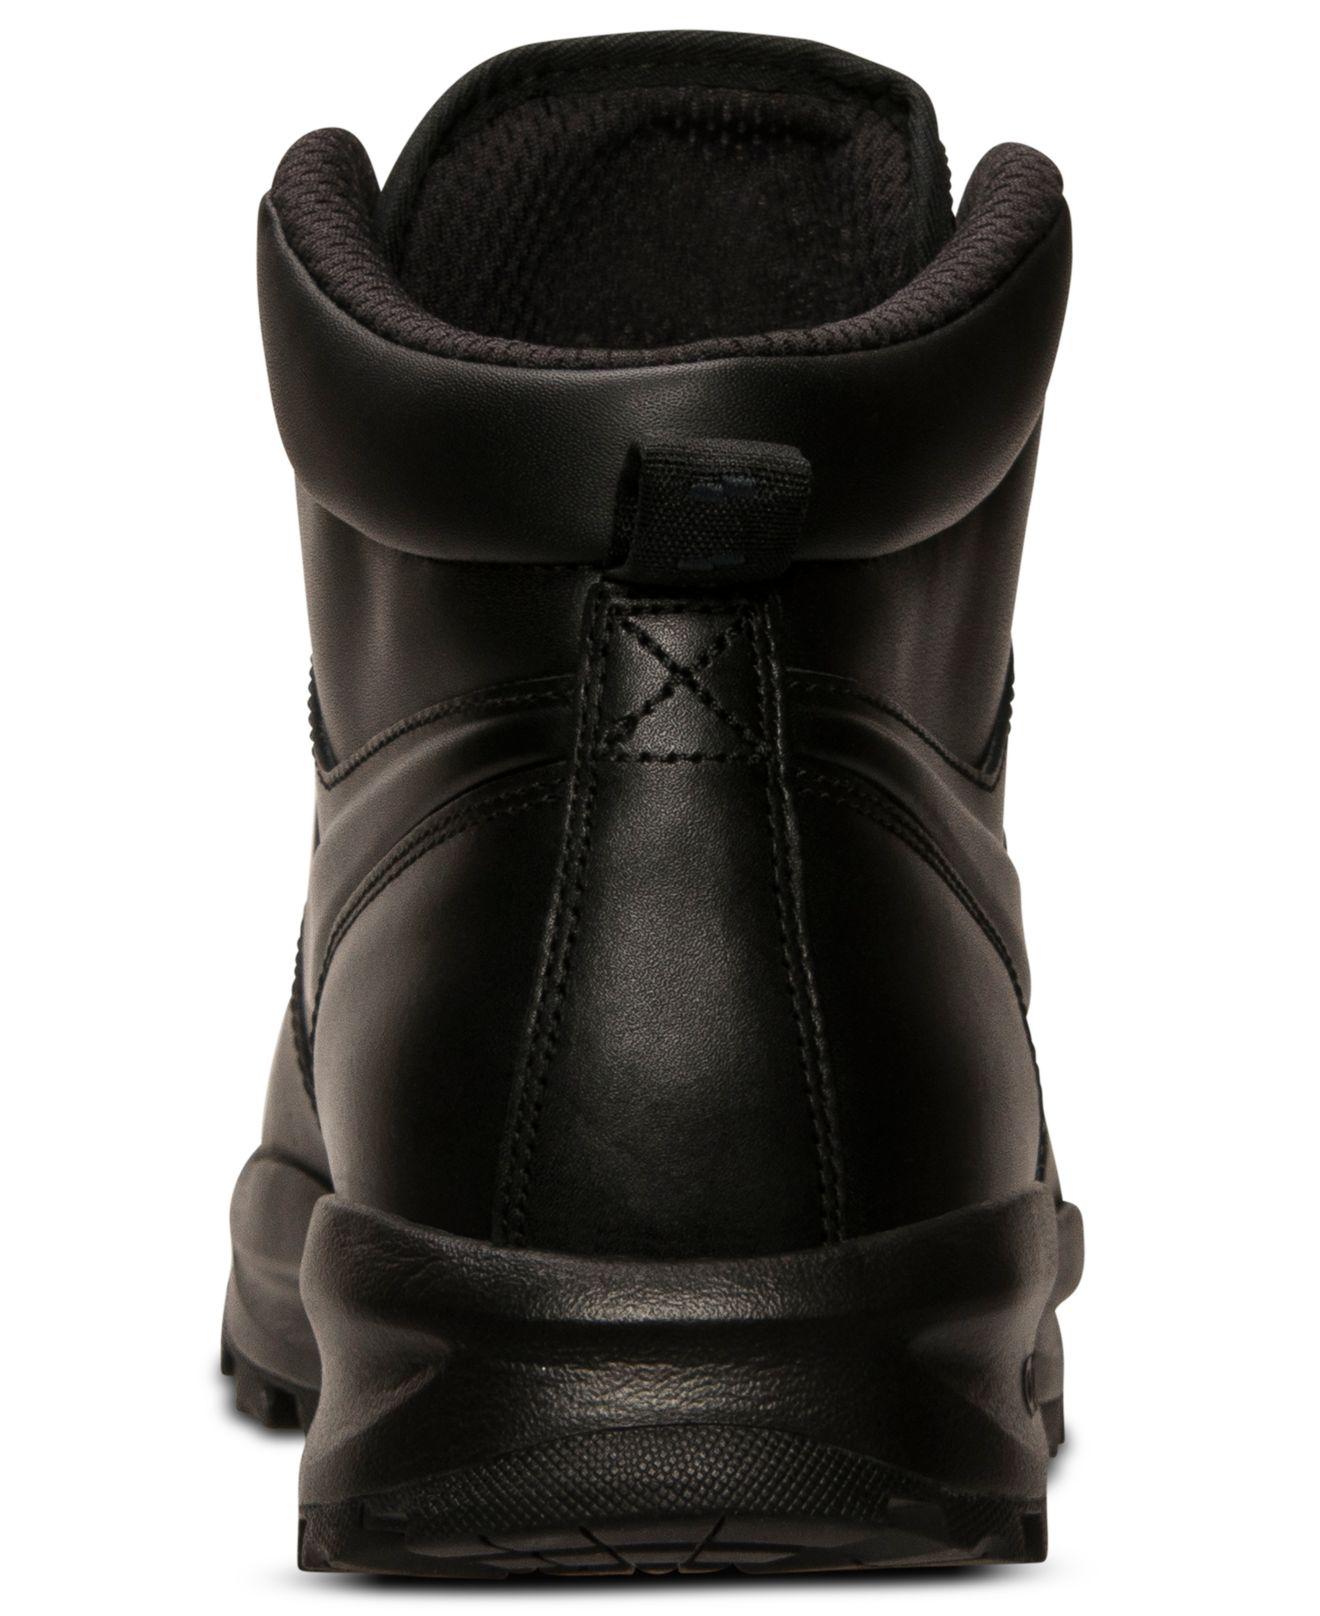 Nike Leather Manoa in Black/Black/Black (Black) for Men - Save 45% | Lyst